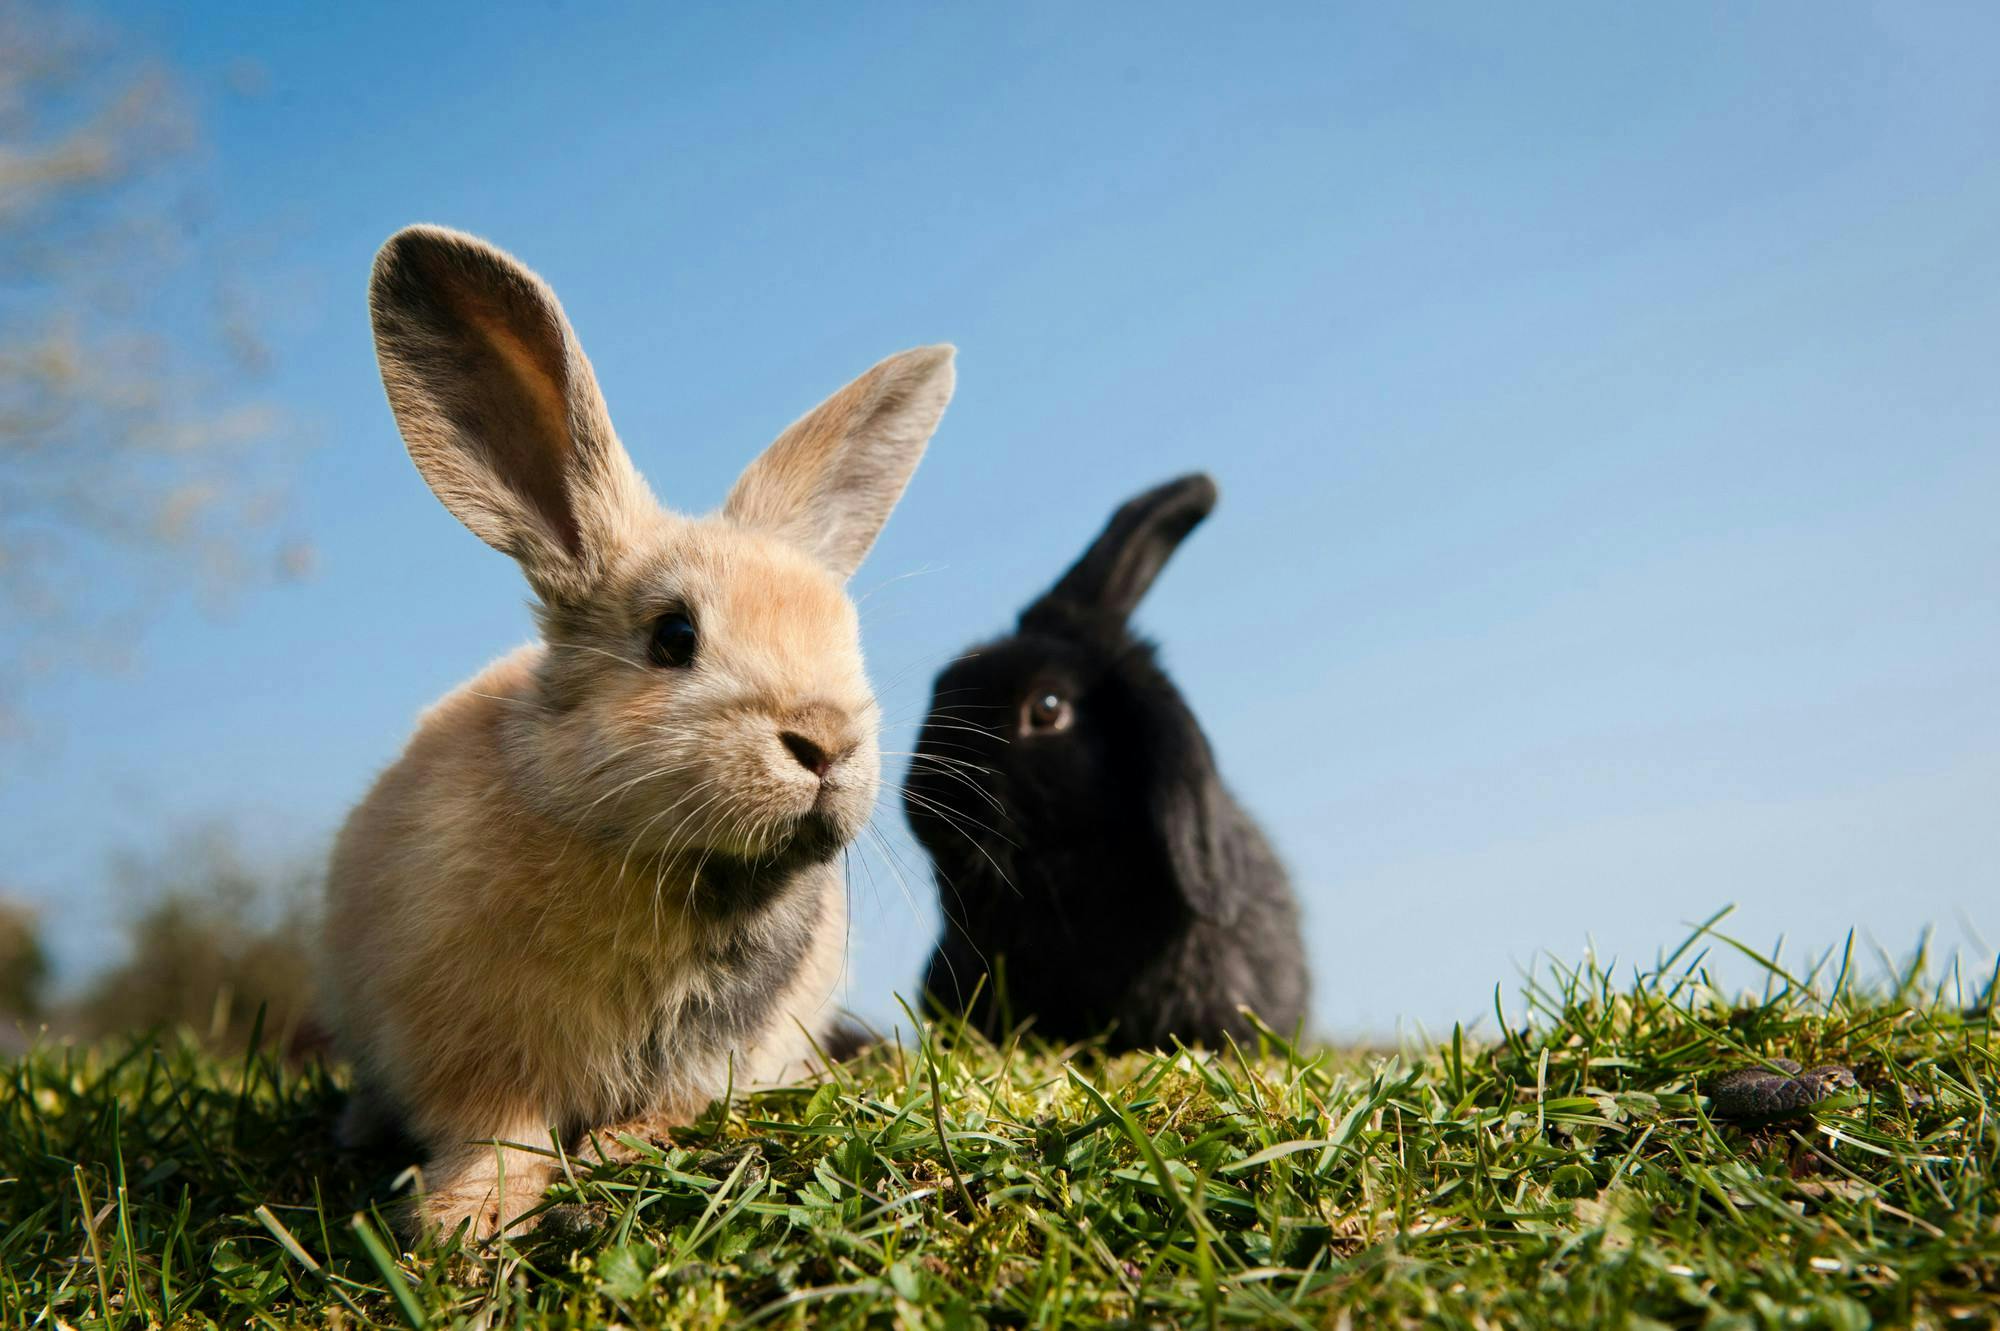 case study hare rodent mammal animal rabbit bunny